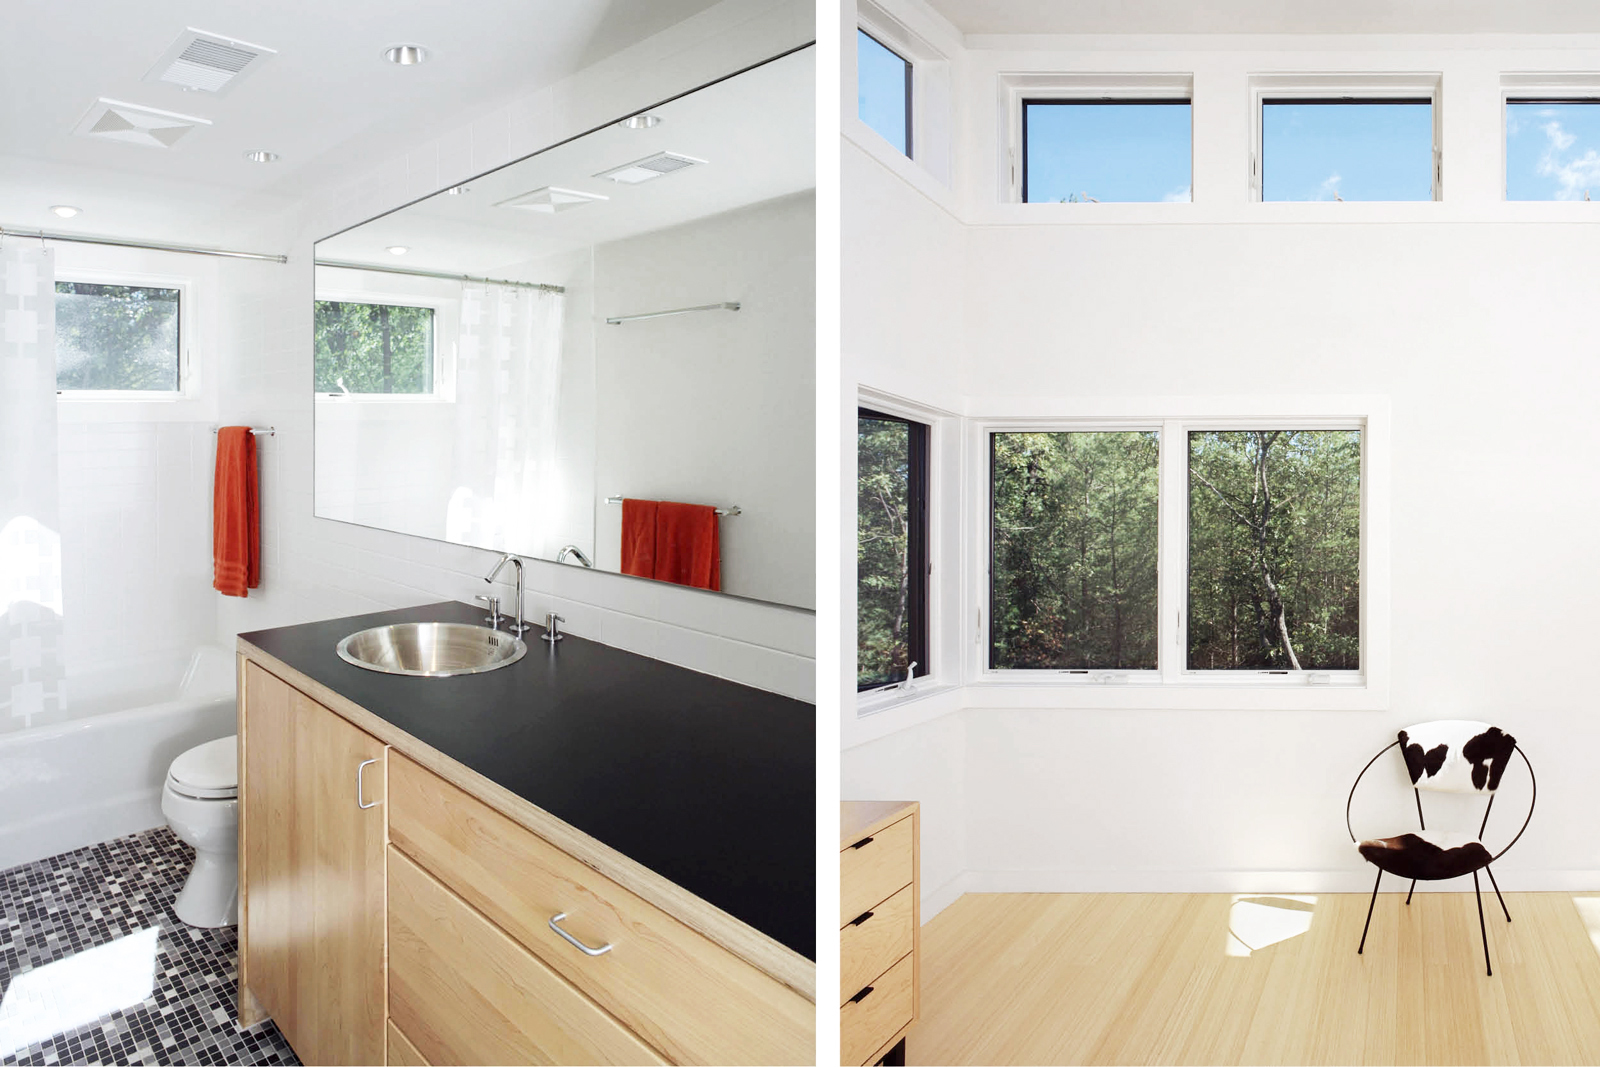 09-res4-resolution-4-architecture-modern-modular-home-prefab-house-mountain-retreat-interior-bathroom-bedroom.jpg